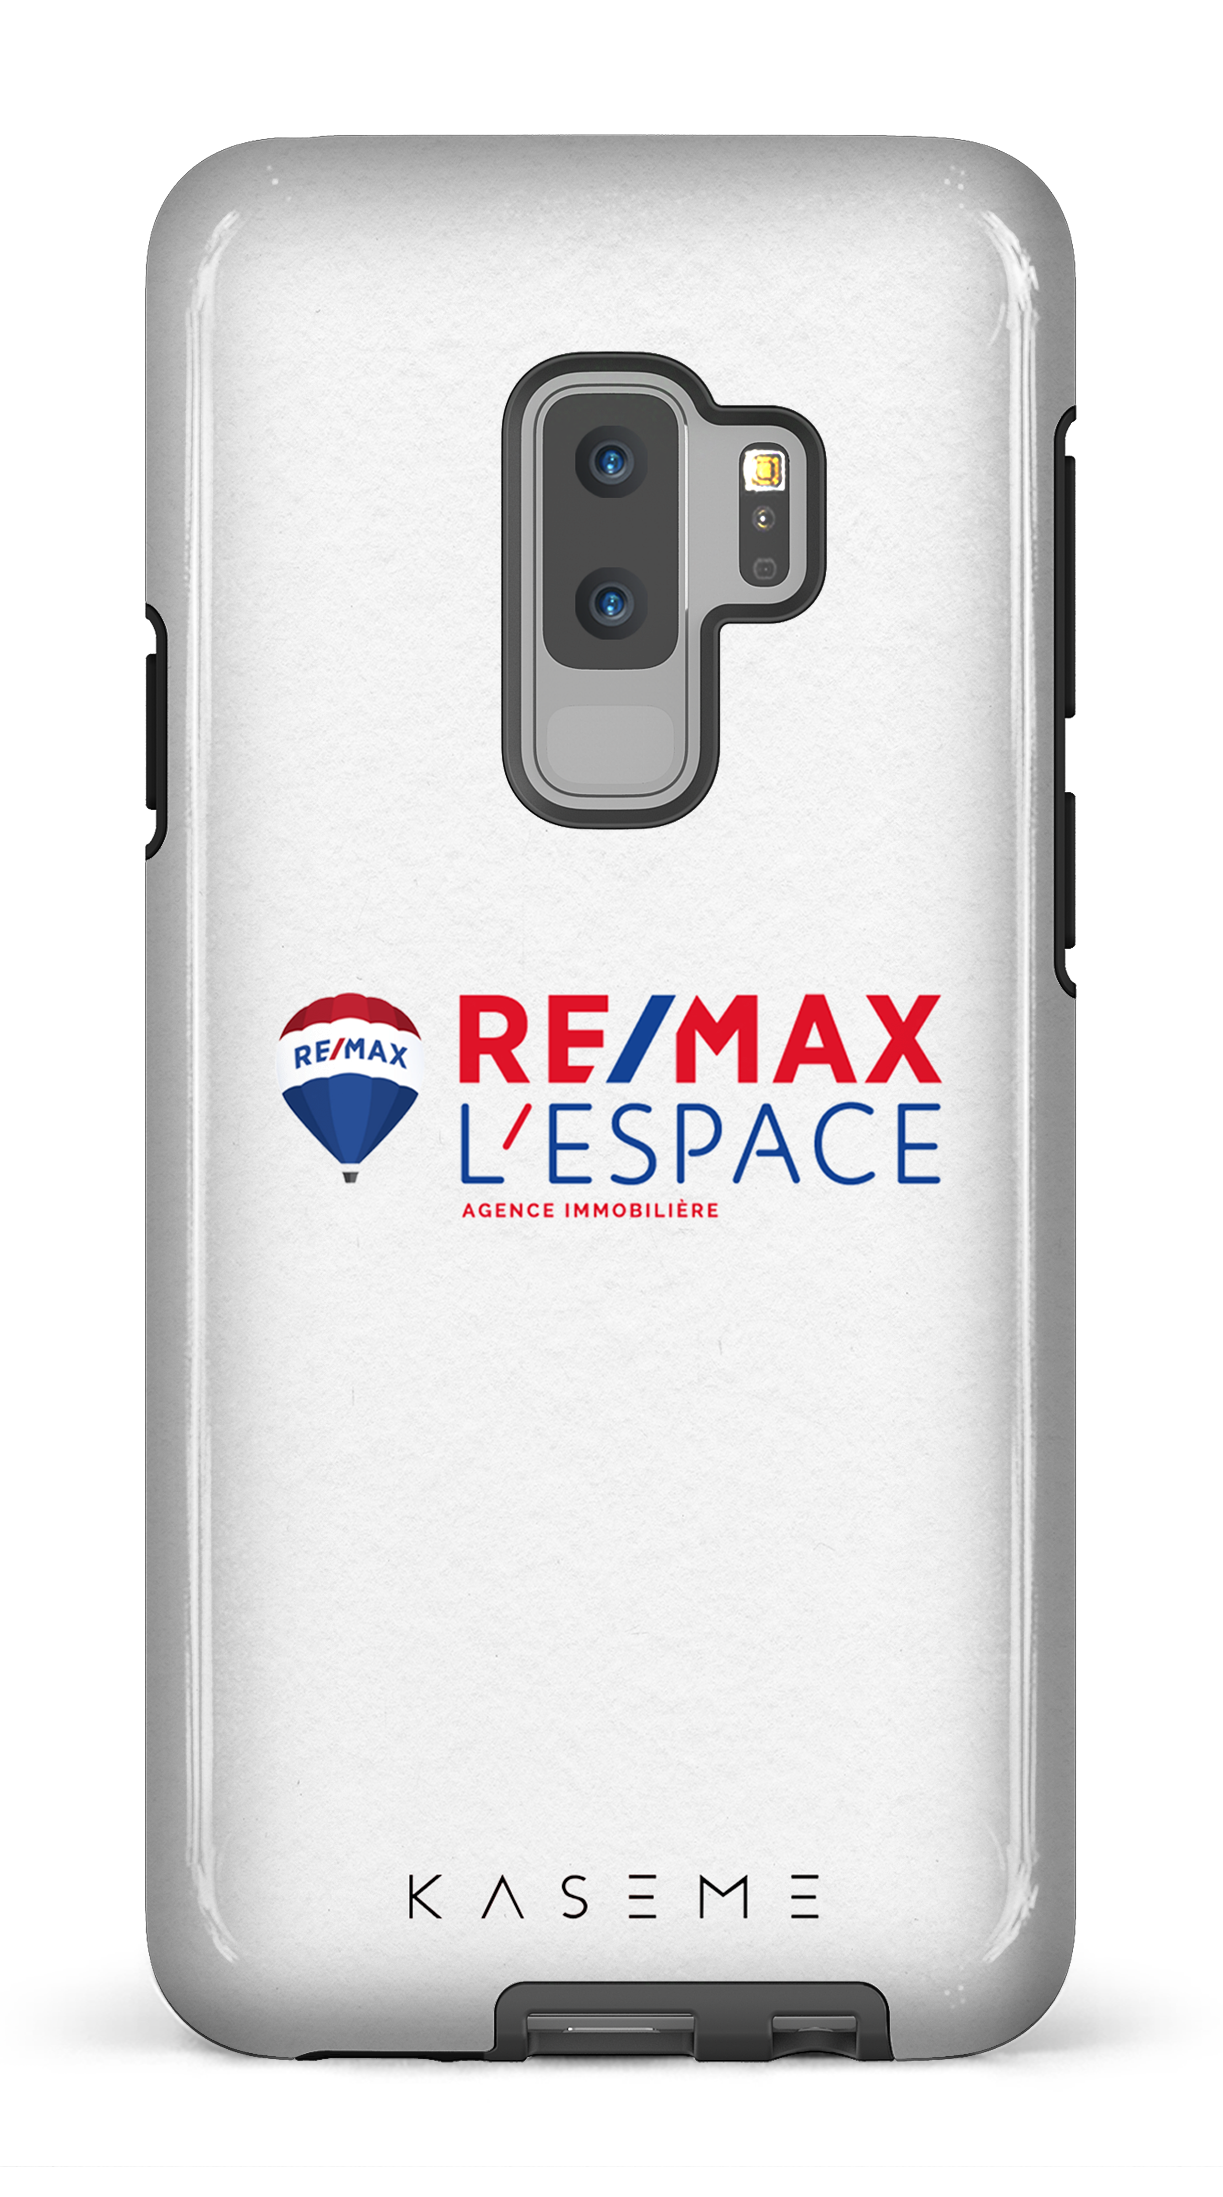 Remax L'Espace Blanc - Galaxy S9 Plus